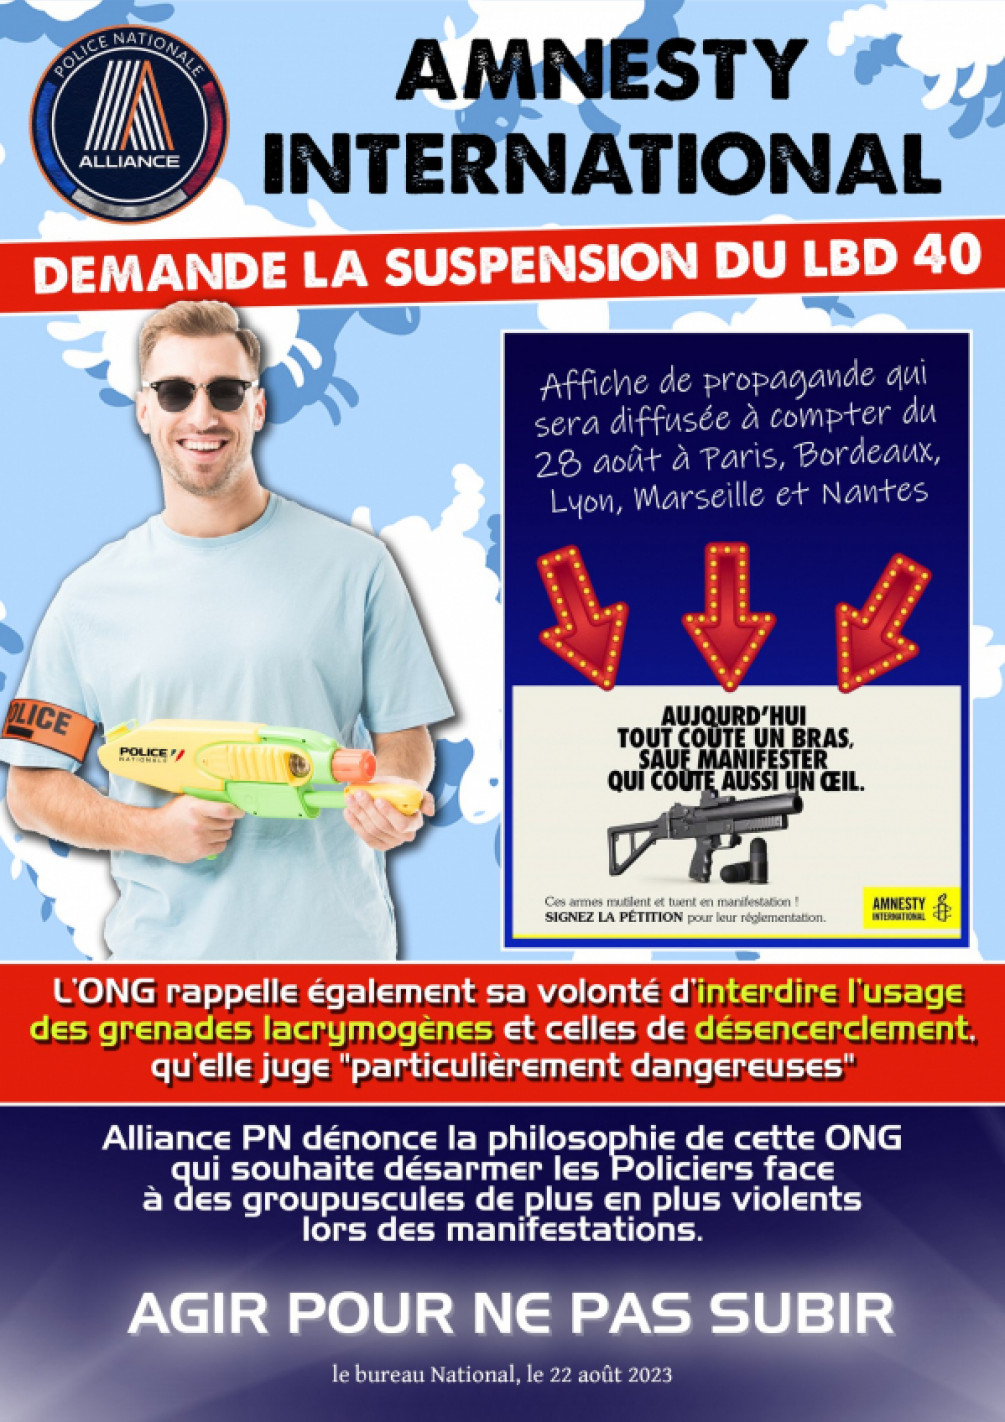 AMNESTY INTERNATIONAL demande la suspension du LBD40